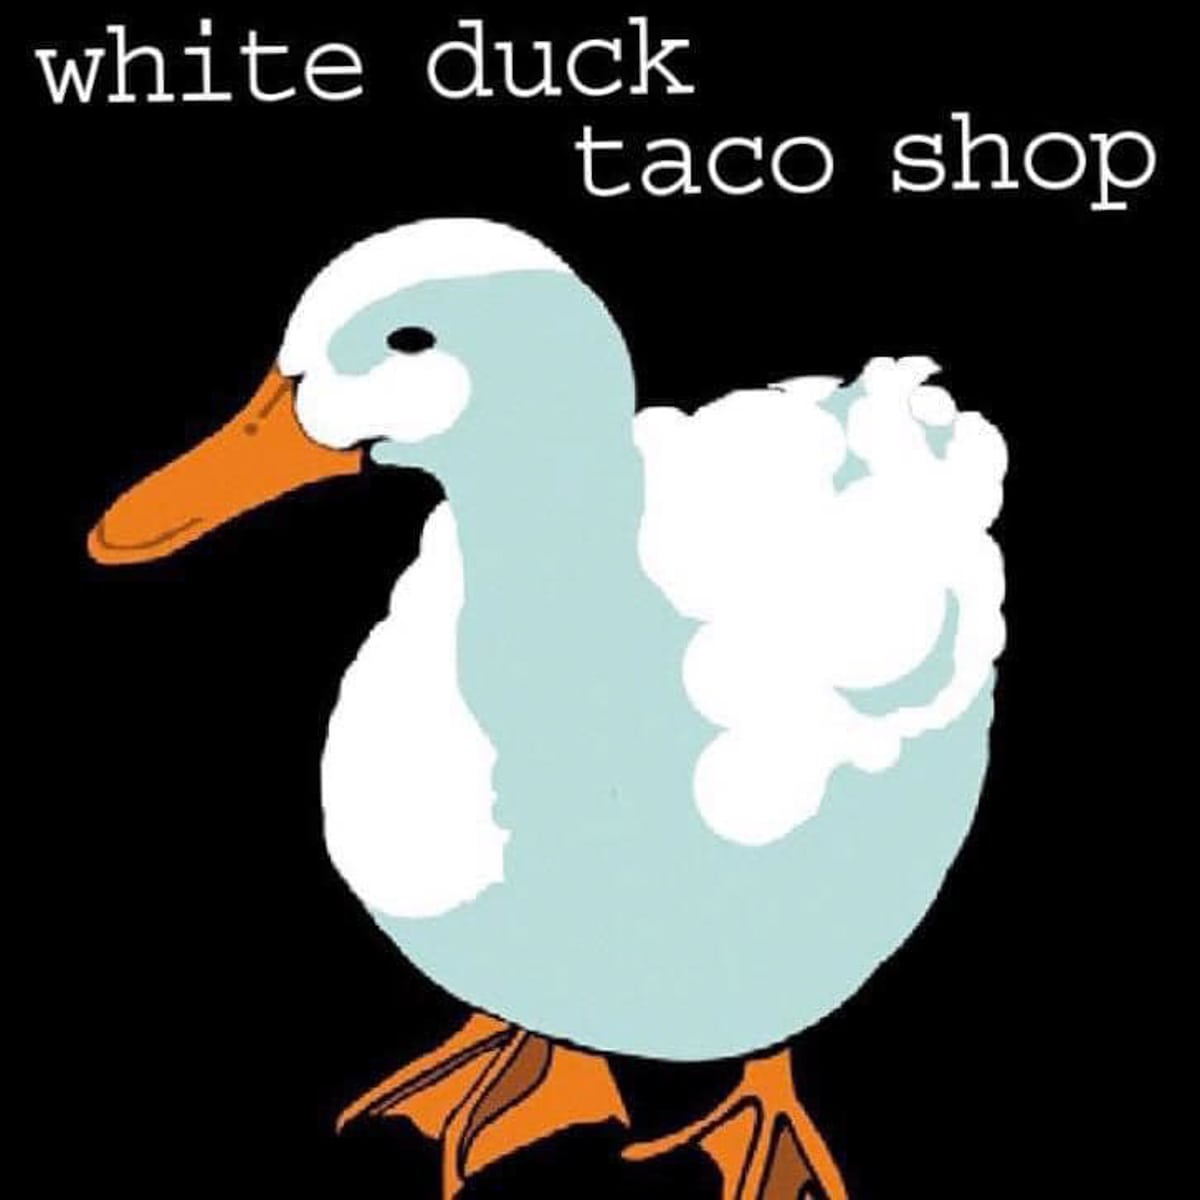 White Duck Taco shop logo